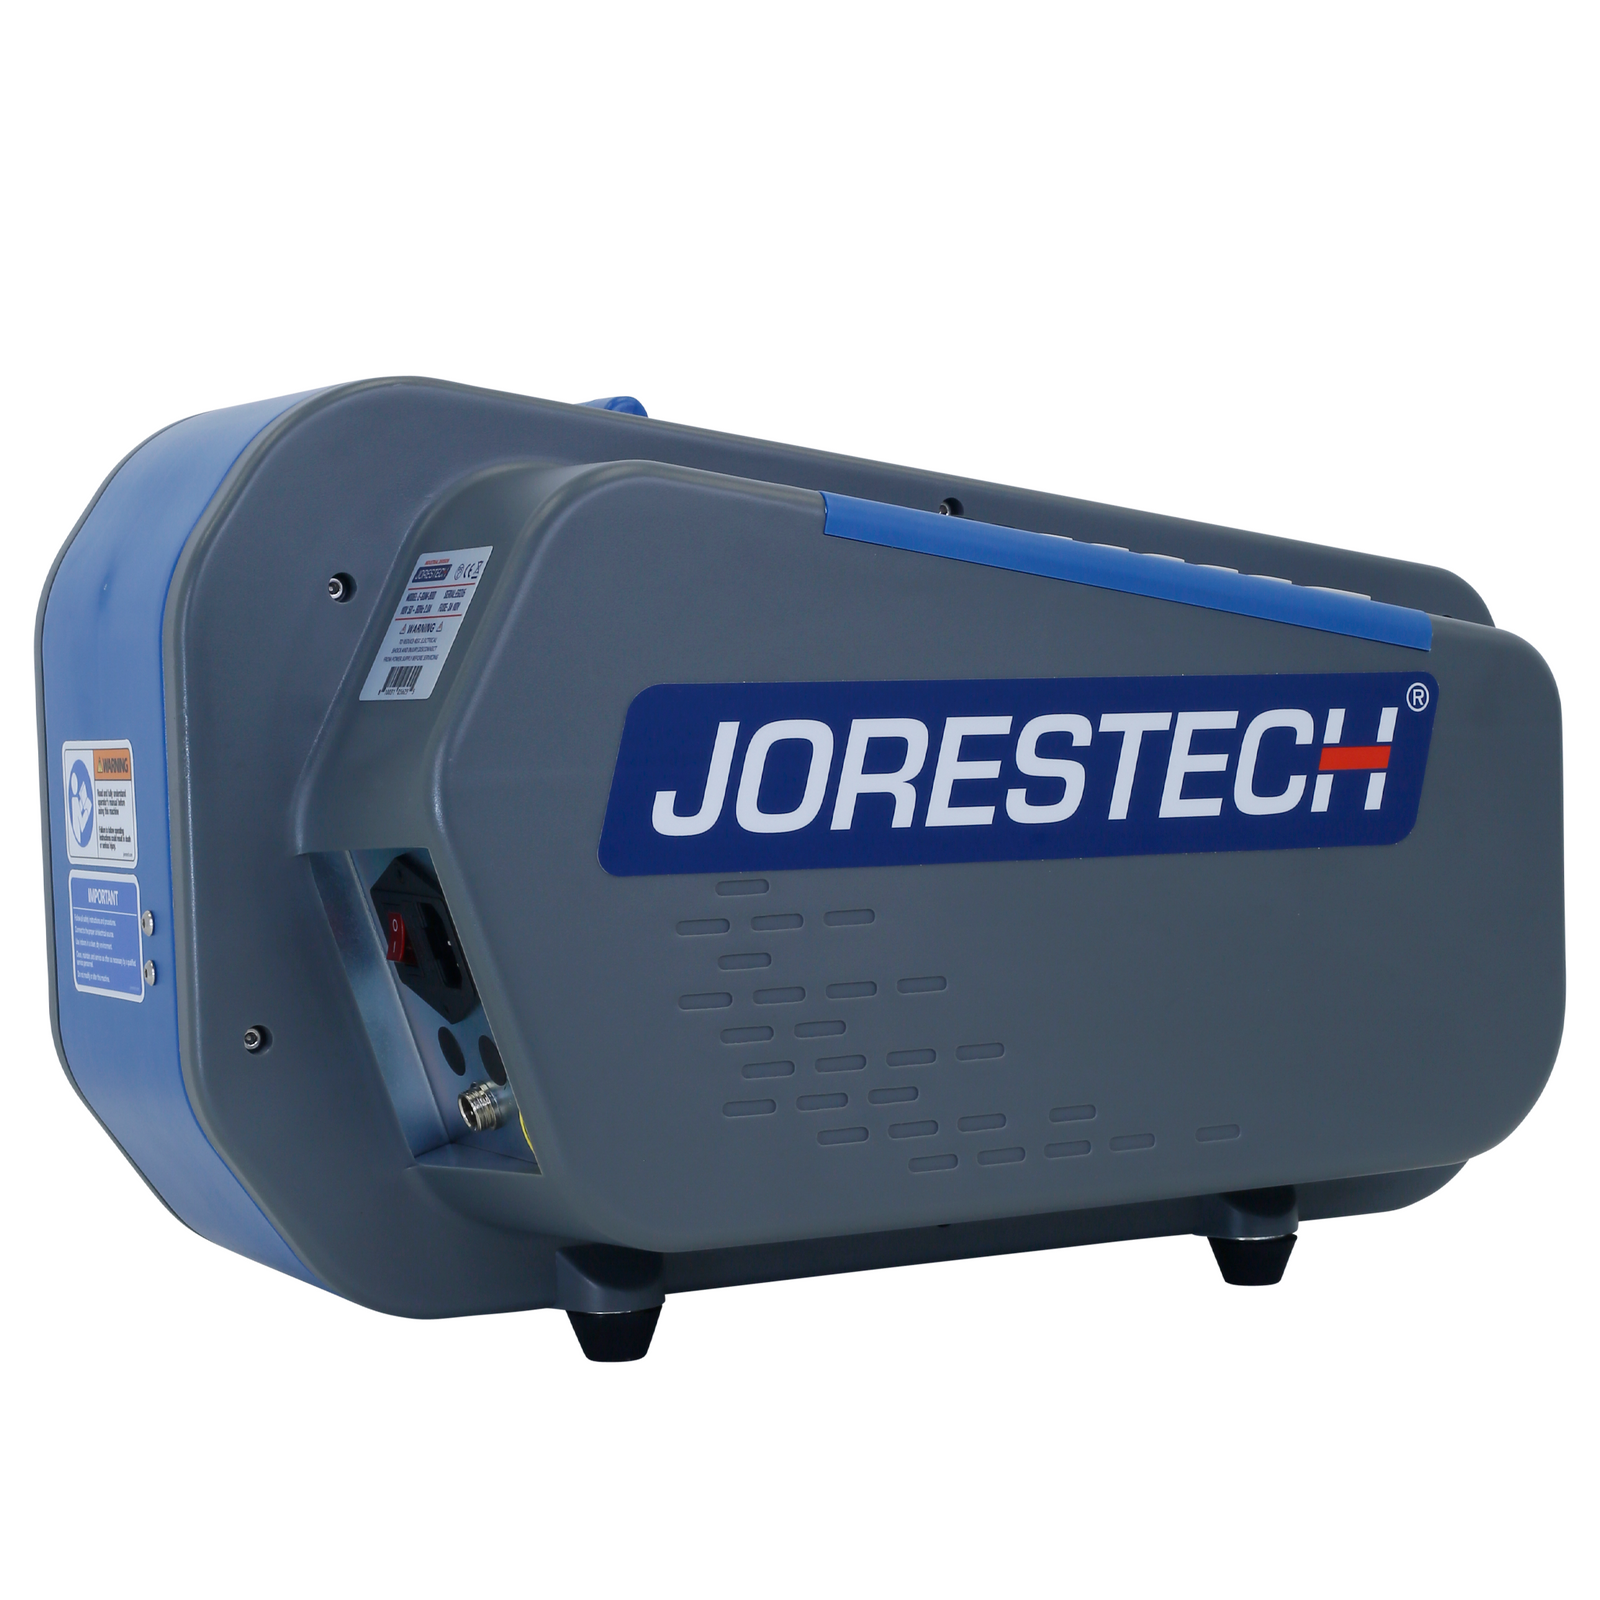 Diagonal view of the JORES TECHNOLOGIES® gummed kraft paper tape dispenser